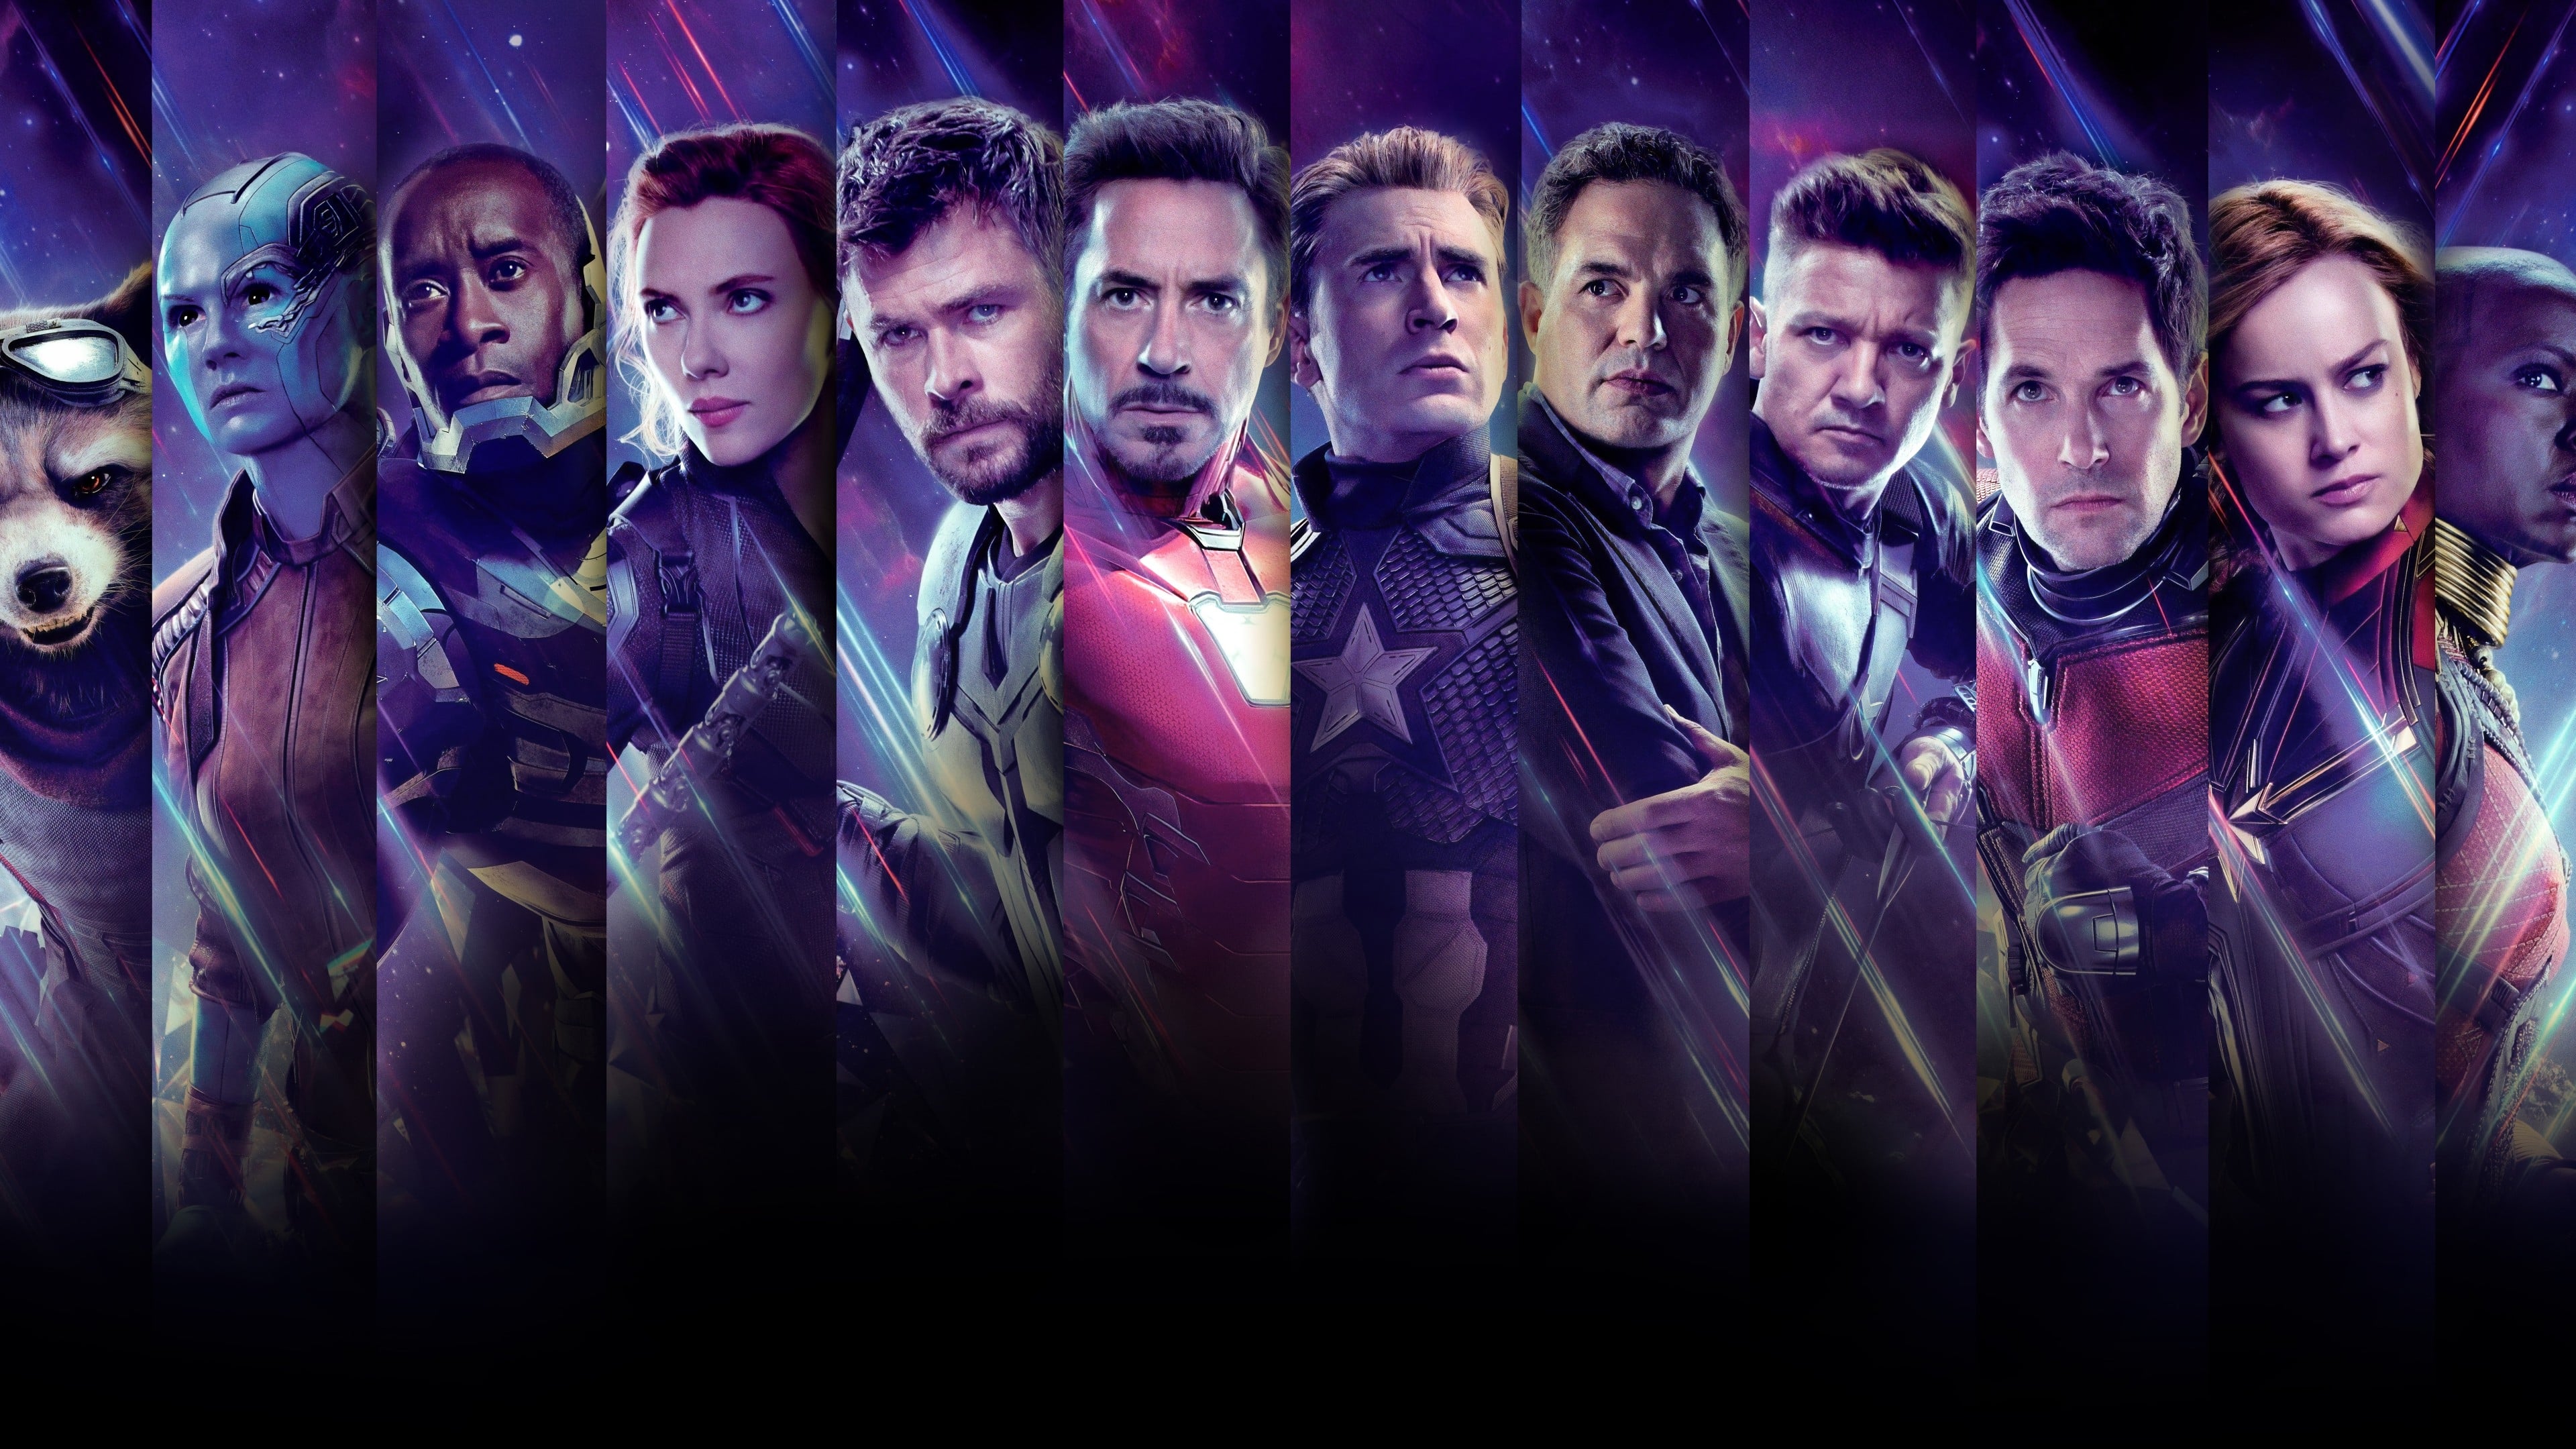 Avengers endgame full movie sub indo